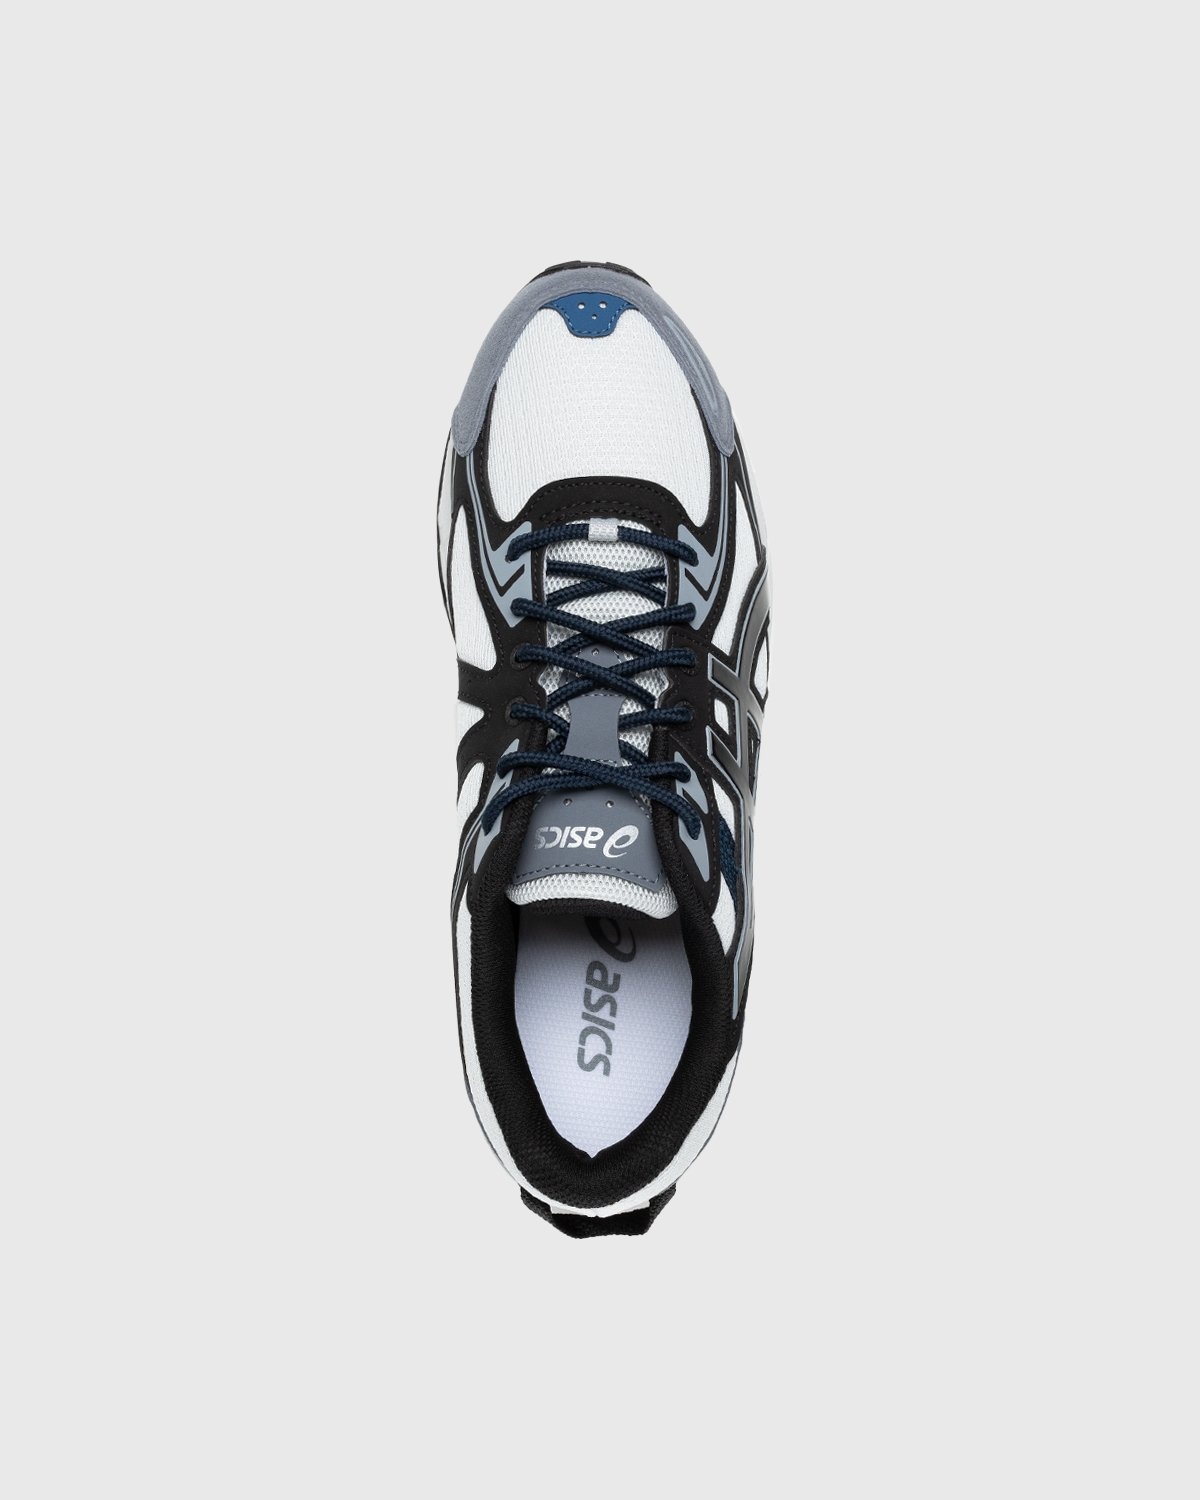 asics – Gel-Venture 6 Glacier Grey Black - Low Top Sneakers - Grey - Image 5